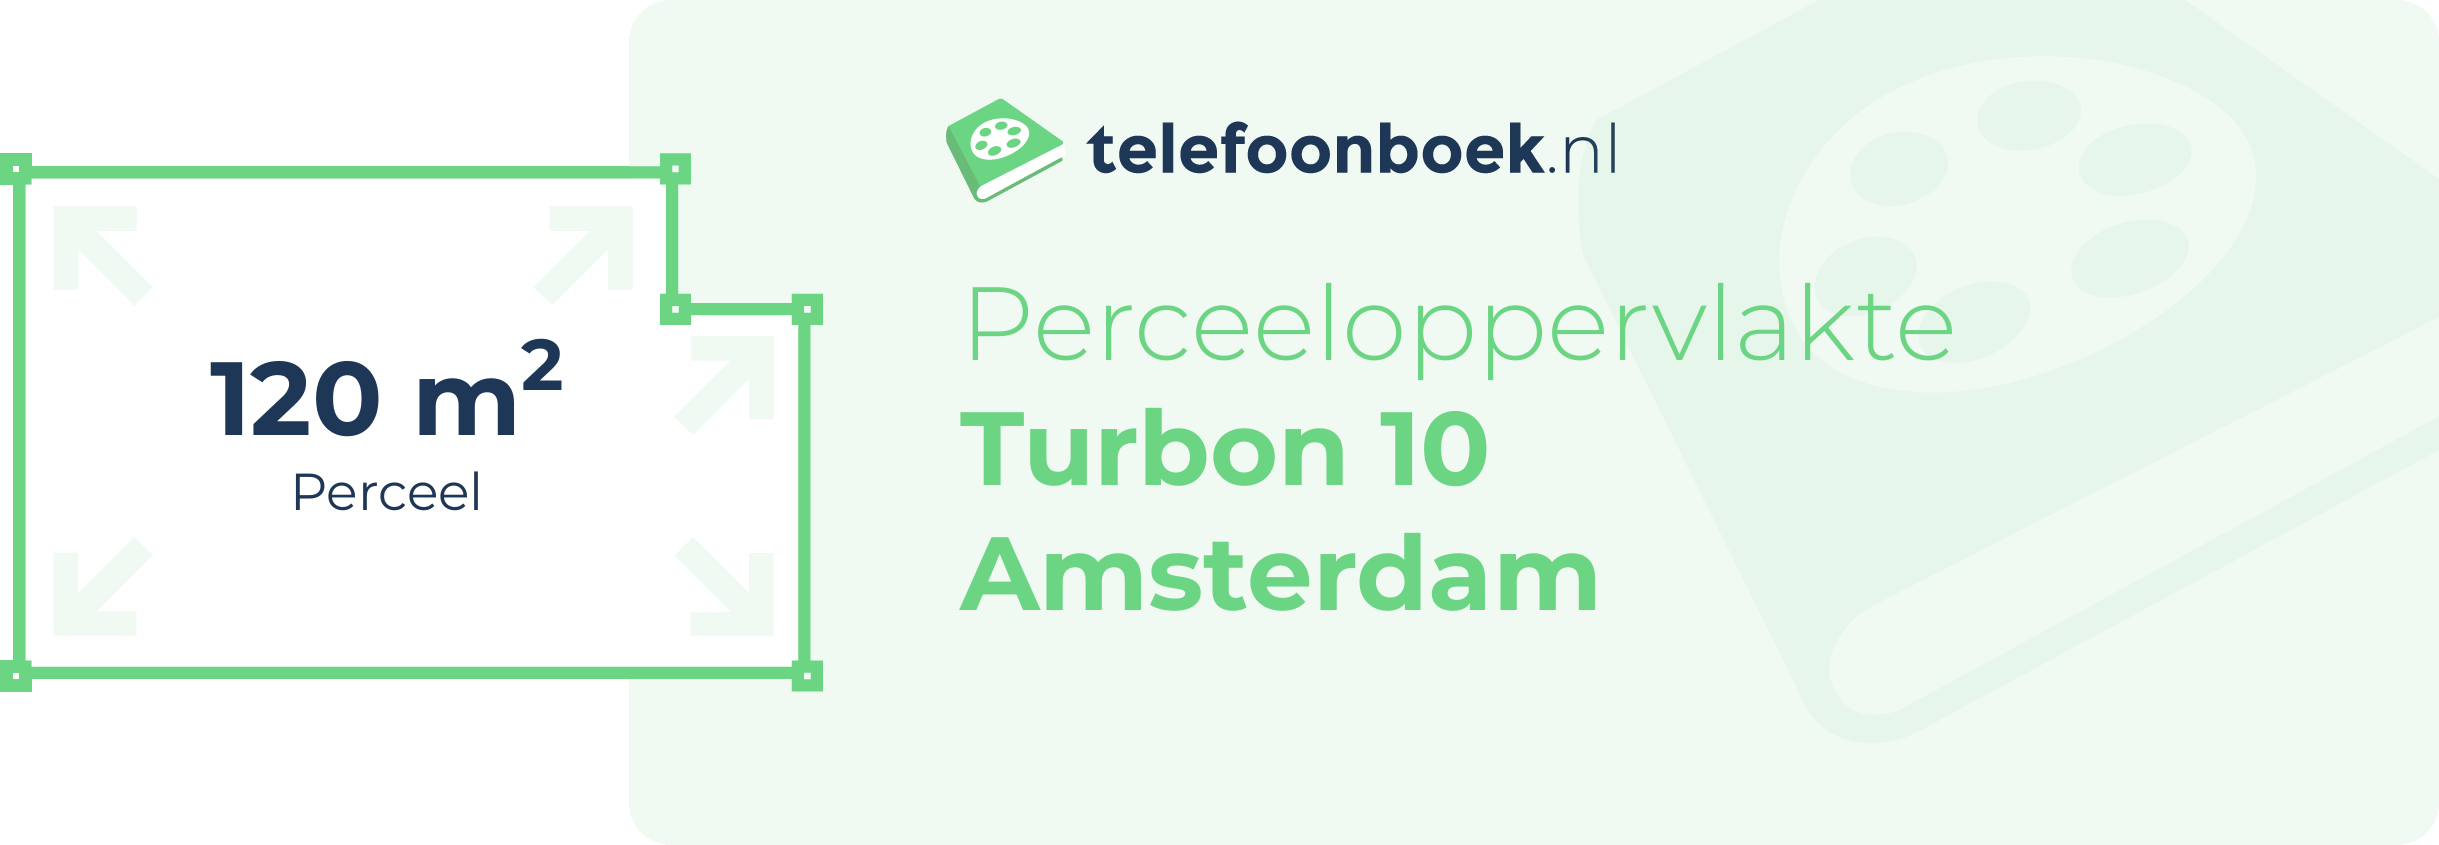 Perceeloppervlakte Turbon 10 Amsterdam